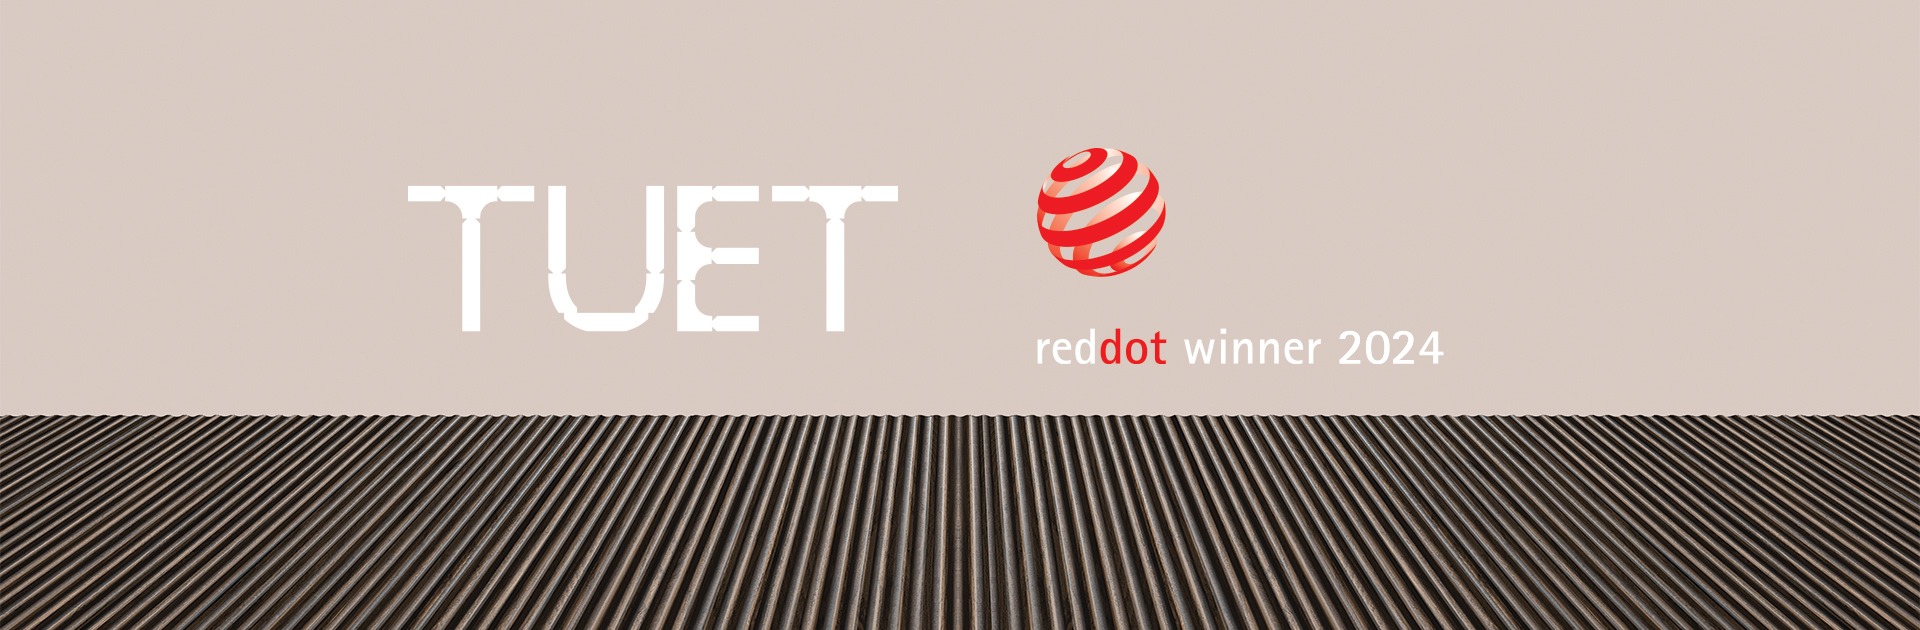 Tuet vince il premio Red Dot Award 2024